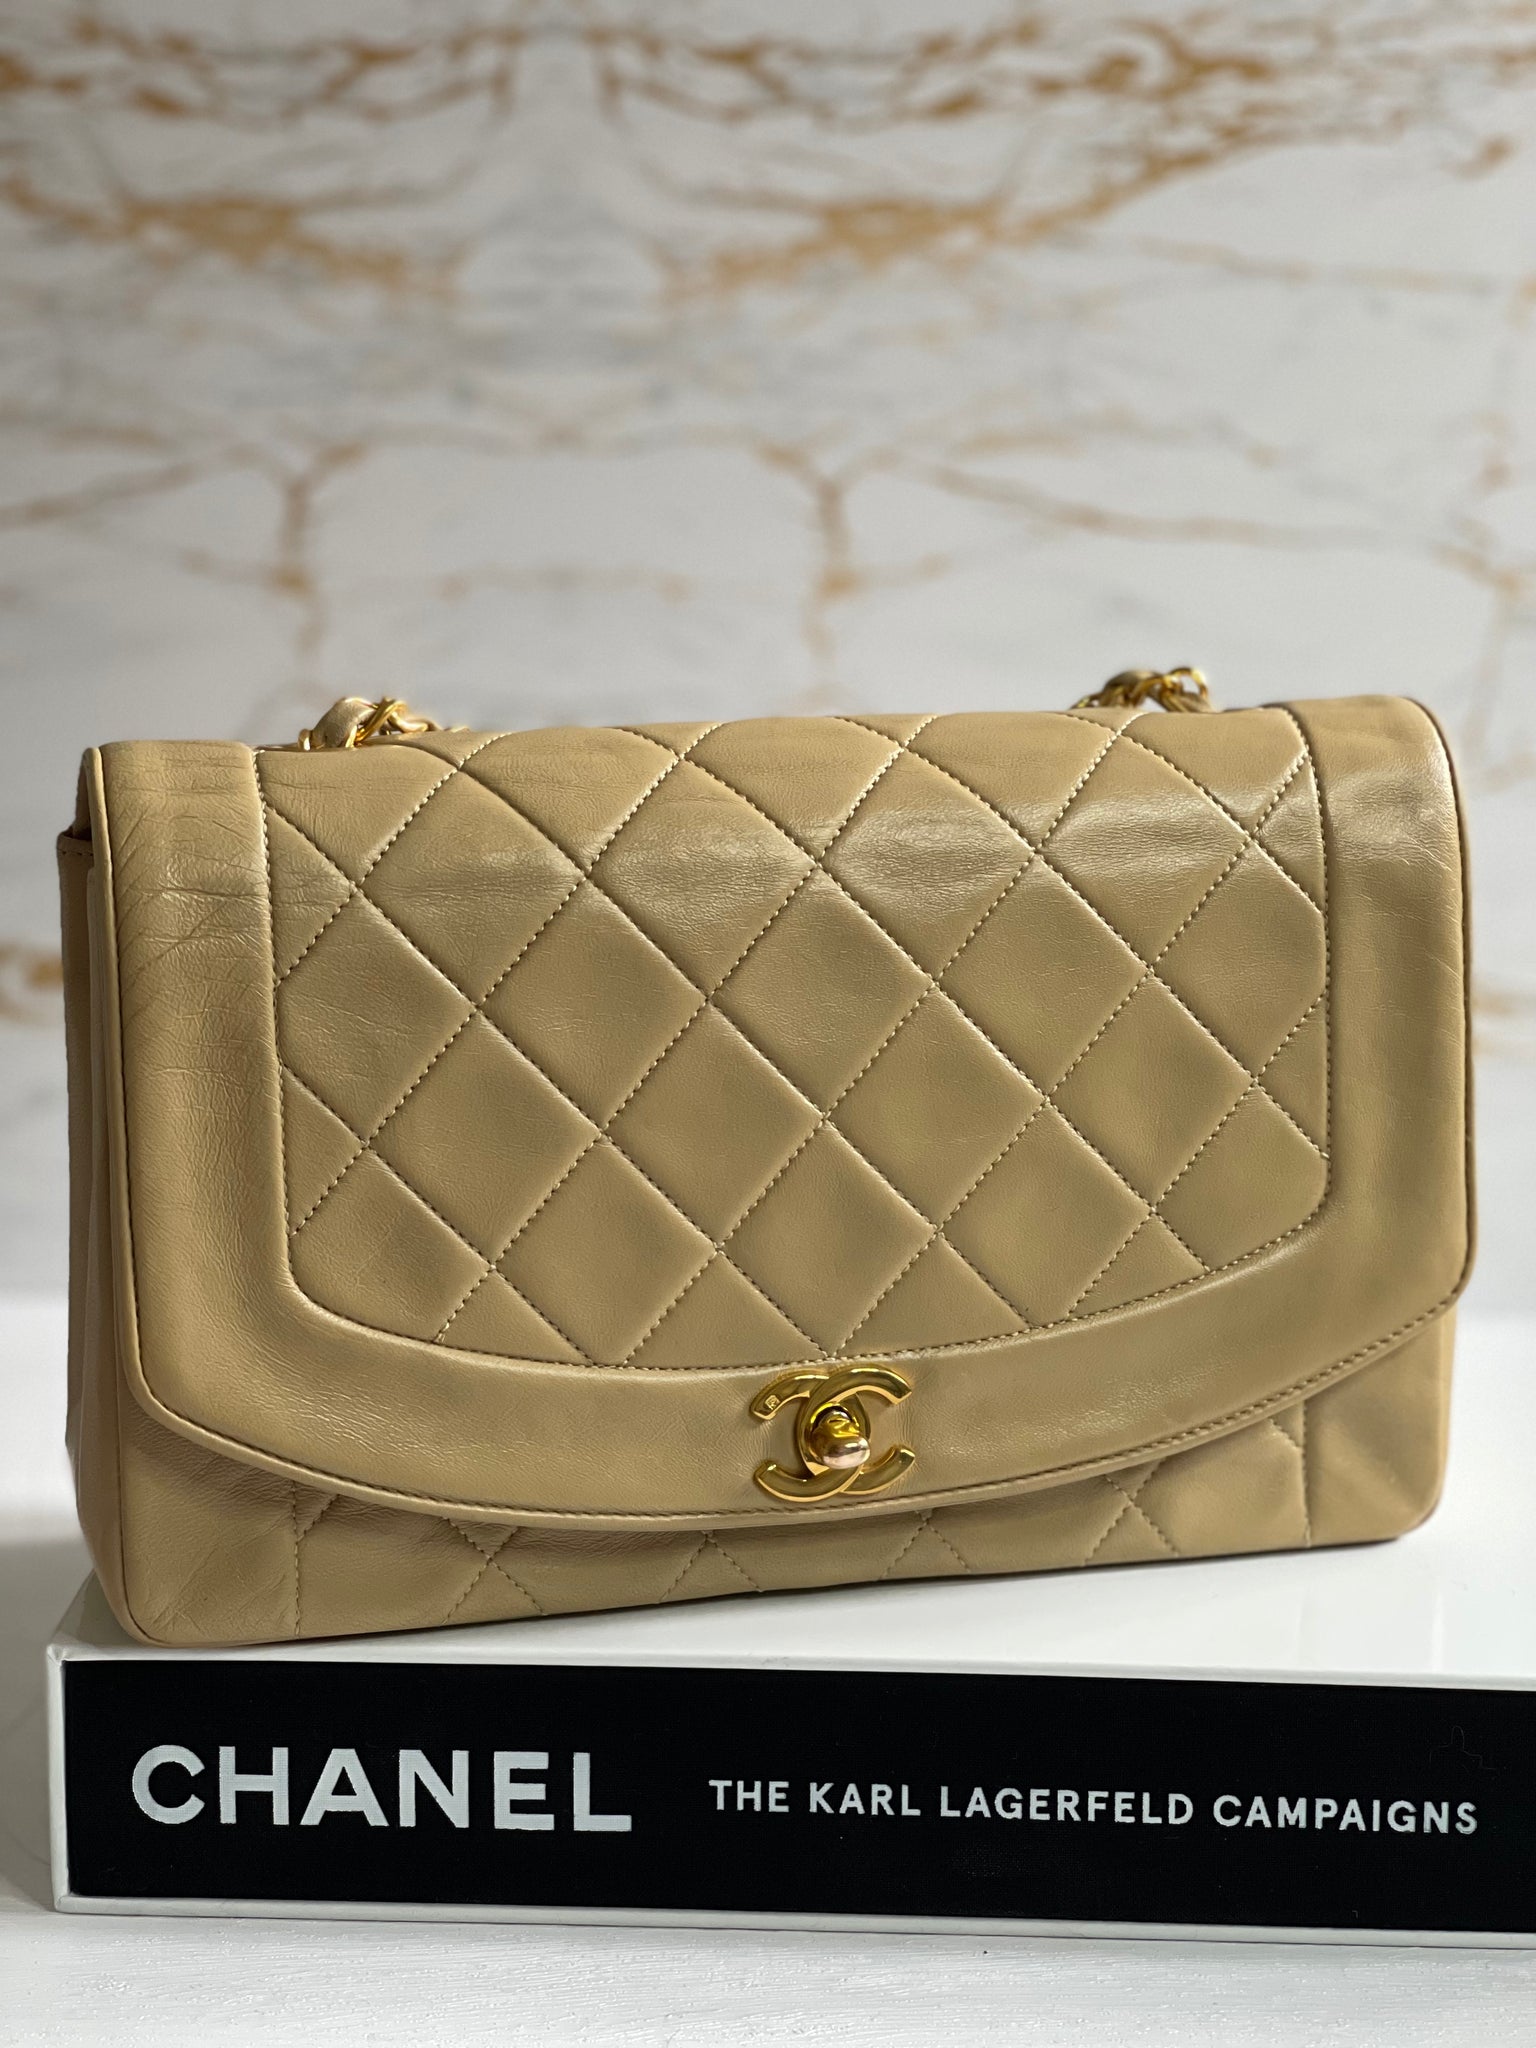 Chanel Diana Flap Bag Size Medium in Milk Tea Beige Lambskin Series 1 With 24k Gold Hardware